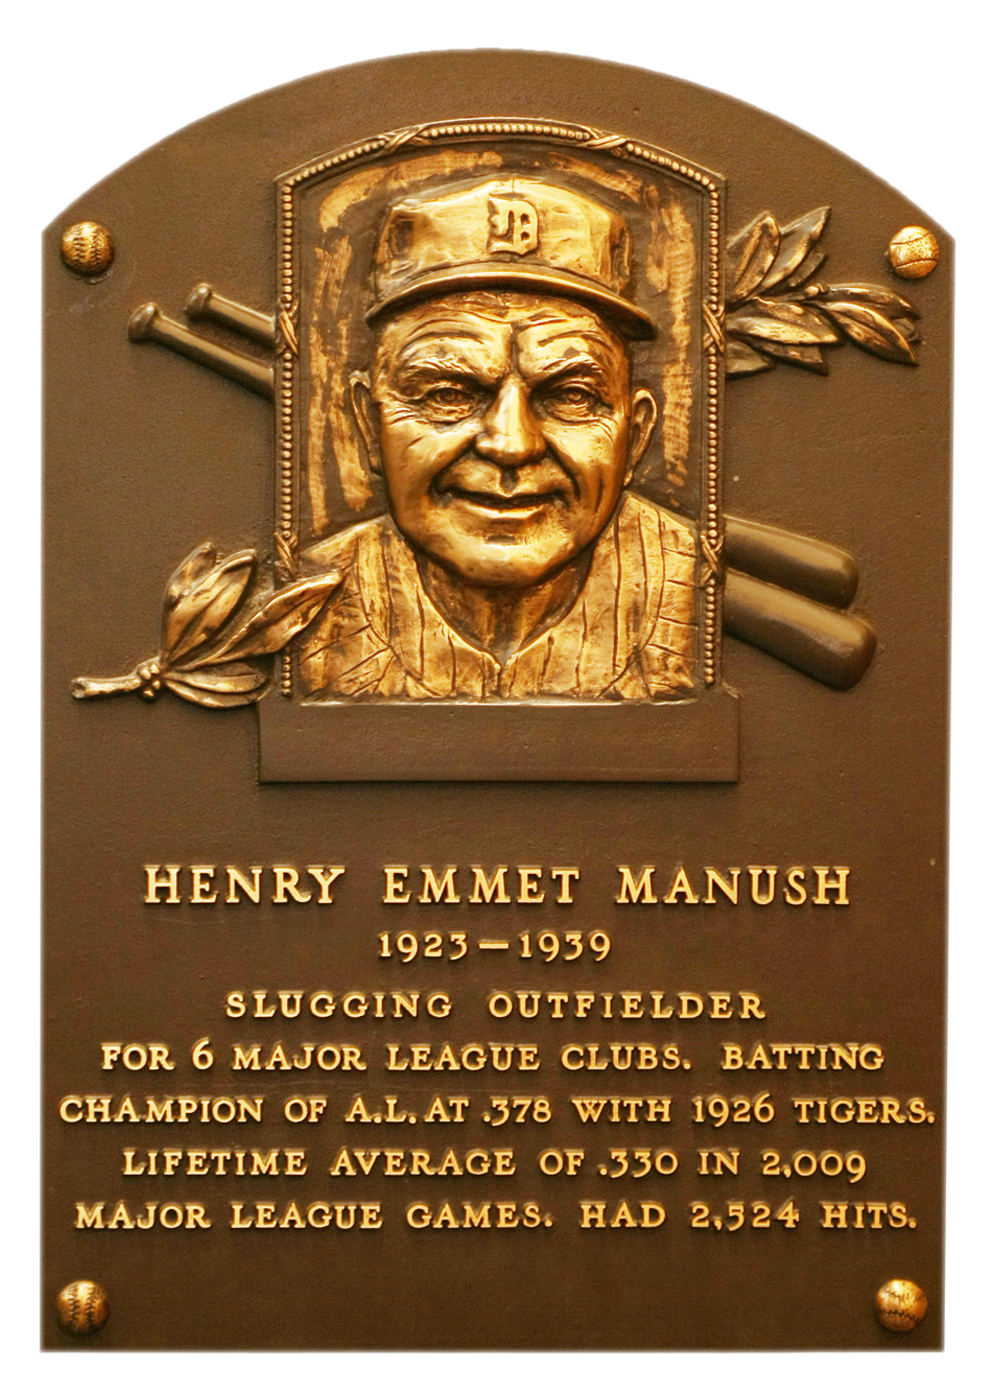 Heinie Manush Hall of Fame plaque